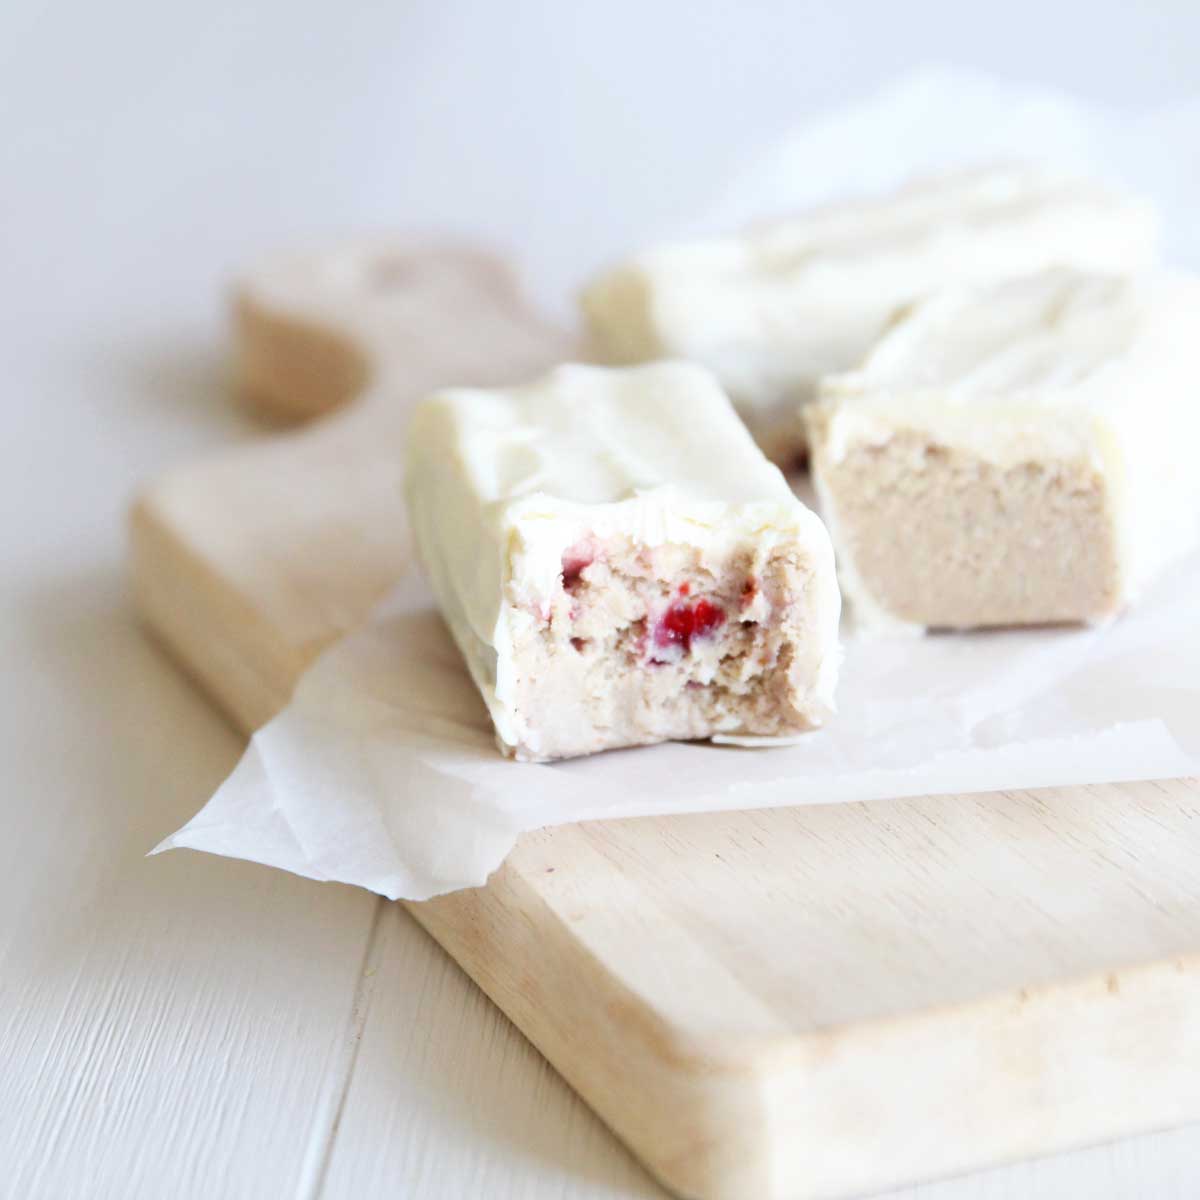 Creamy & Sweet No-Bake Strawberry Cheesecake Protein Bars - Almond Joy Protein Bars